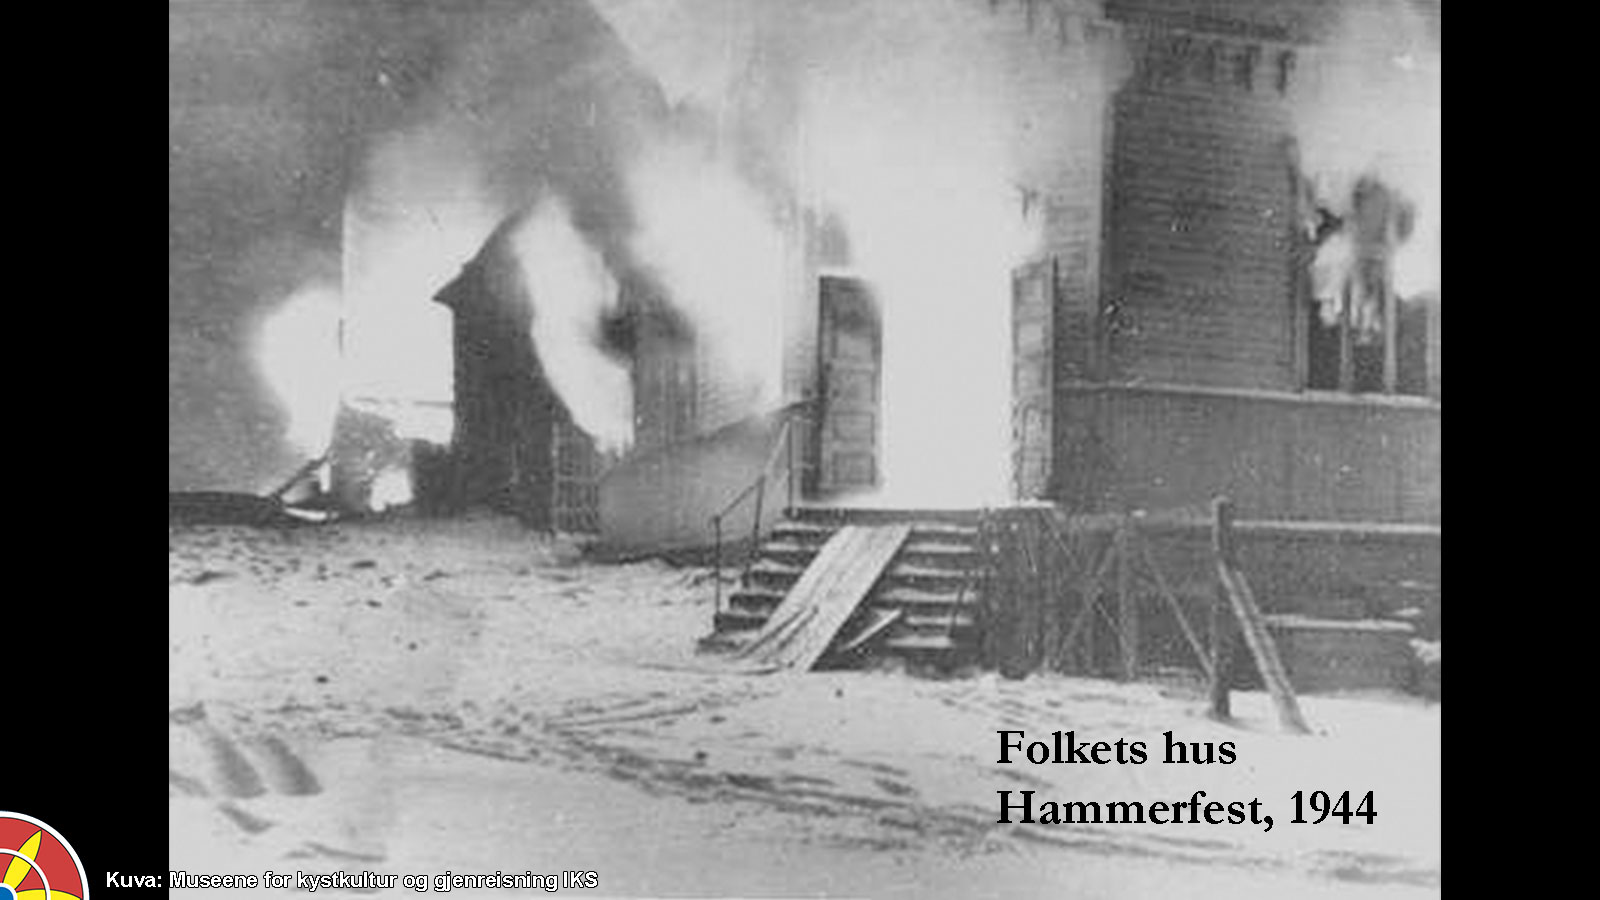 Folkets hus, Hammerfest 1944